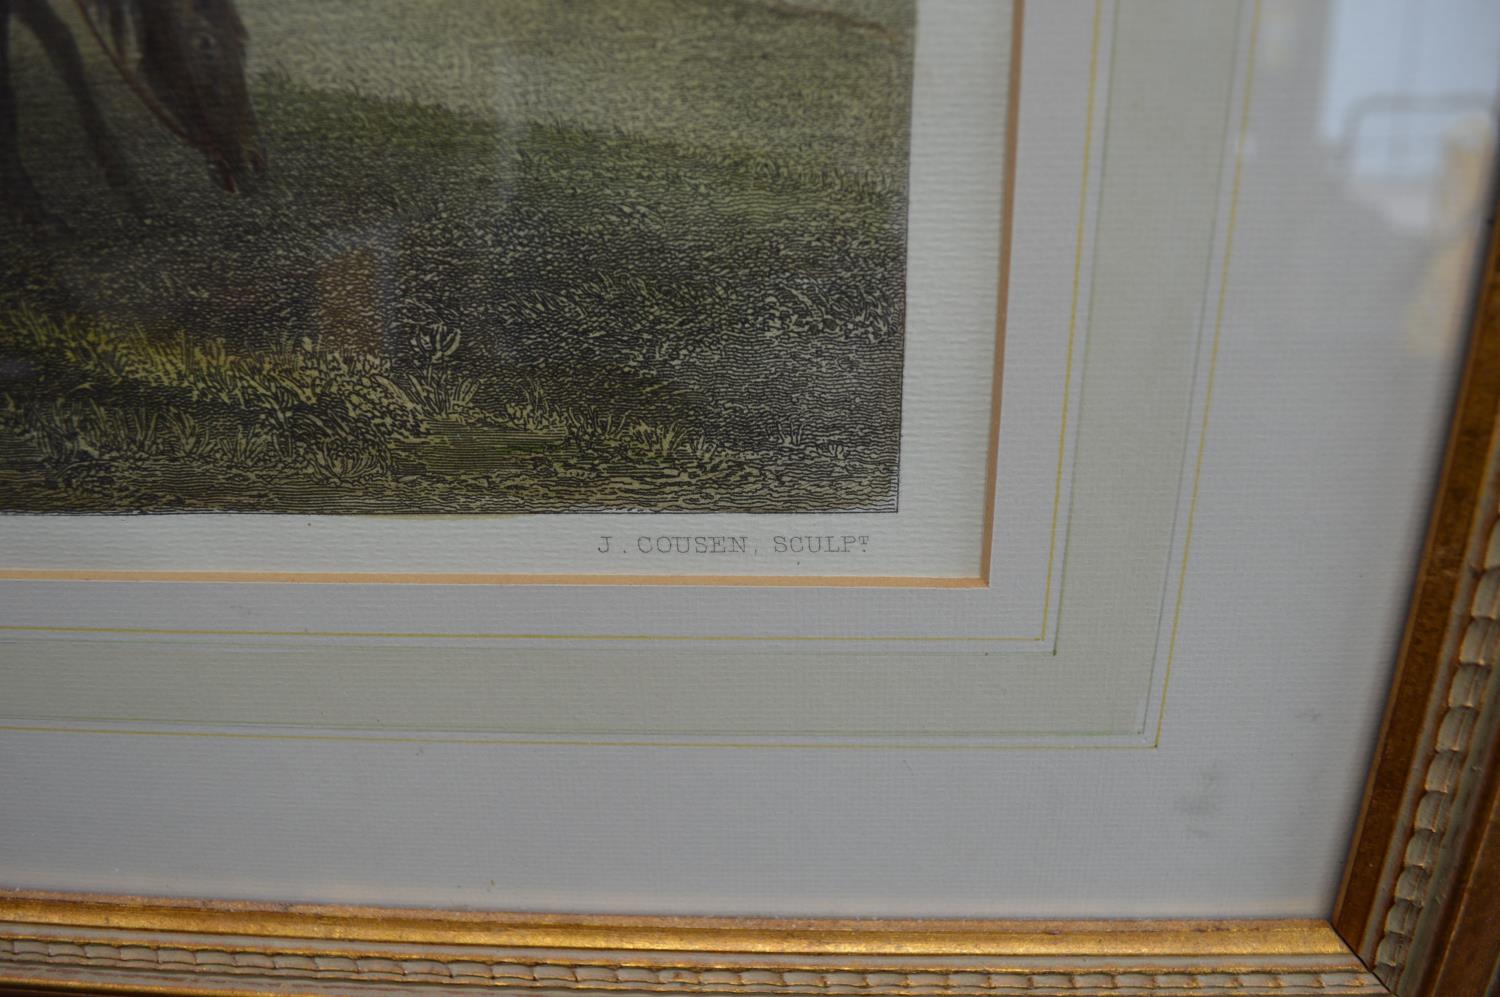 J Cousen coloured engraving titled The Harvest-Field - 53cm x 38cm in mounted glazed gilt frame - Image 2 of 4